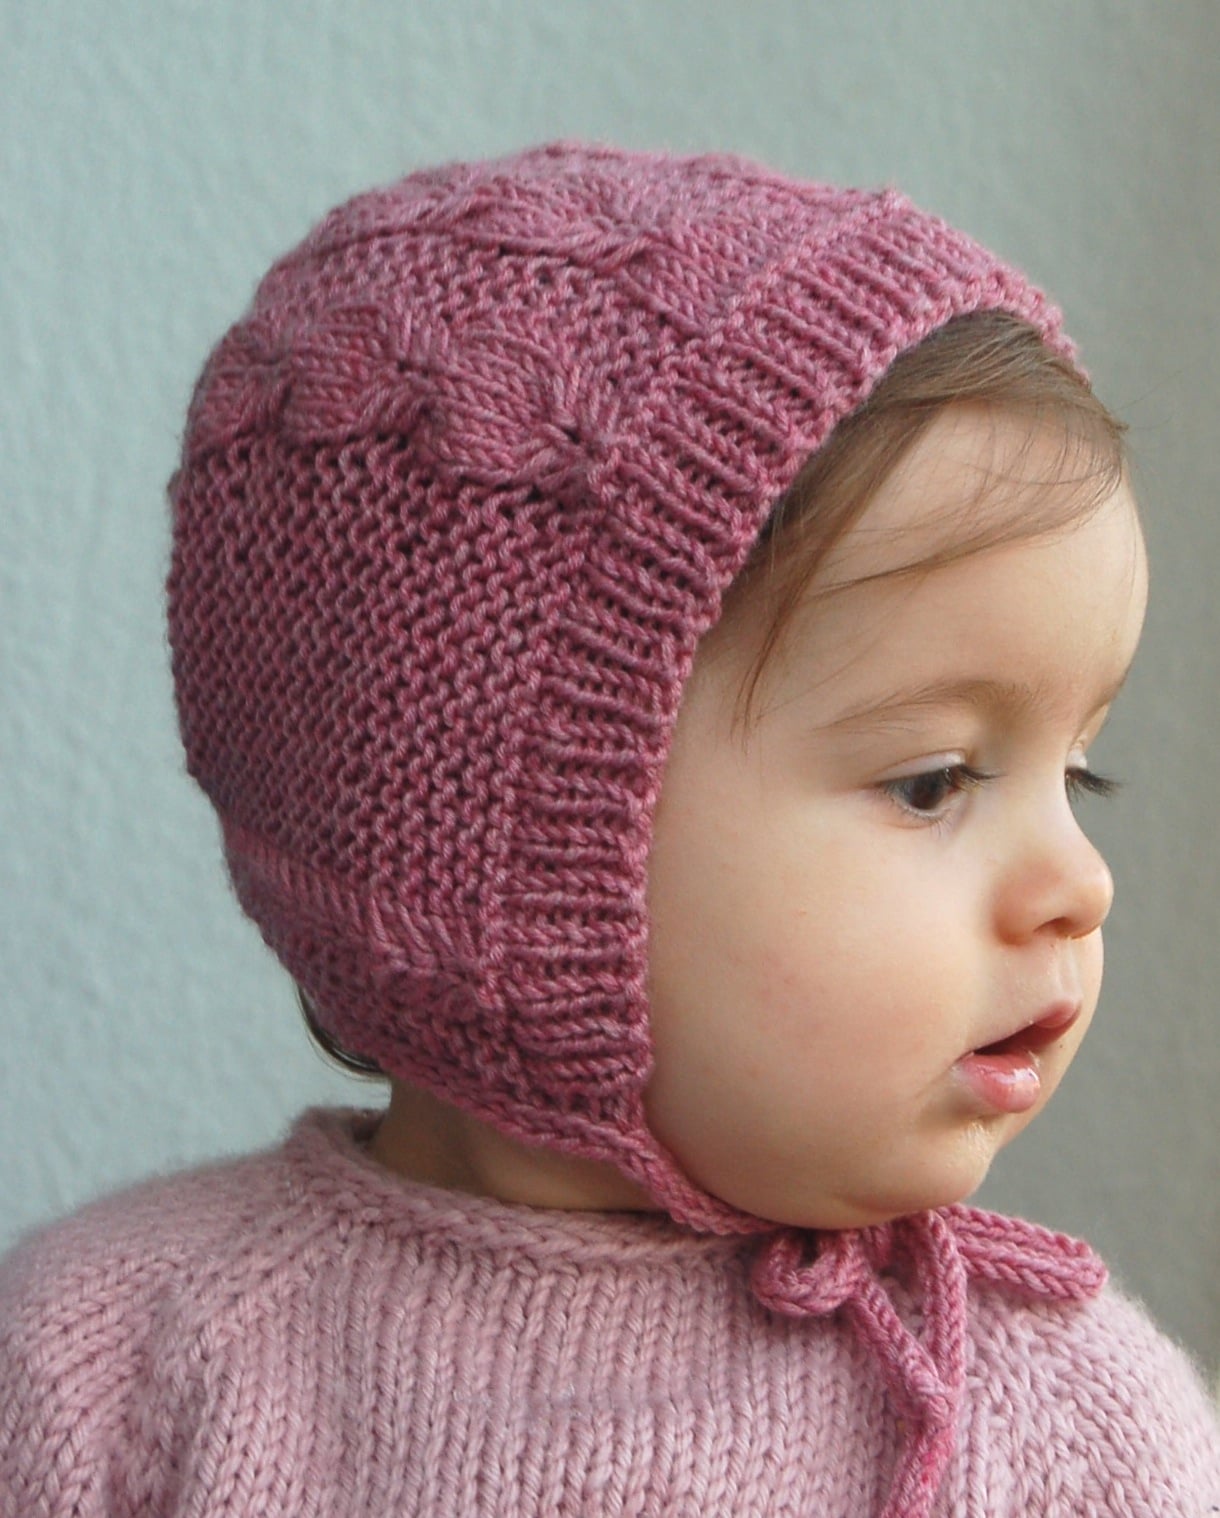 Silverfox bonnet knitting pattern by Lisa Chemery - Frogginette Knitting Patterns